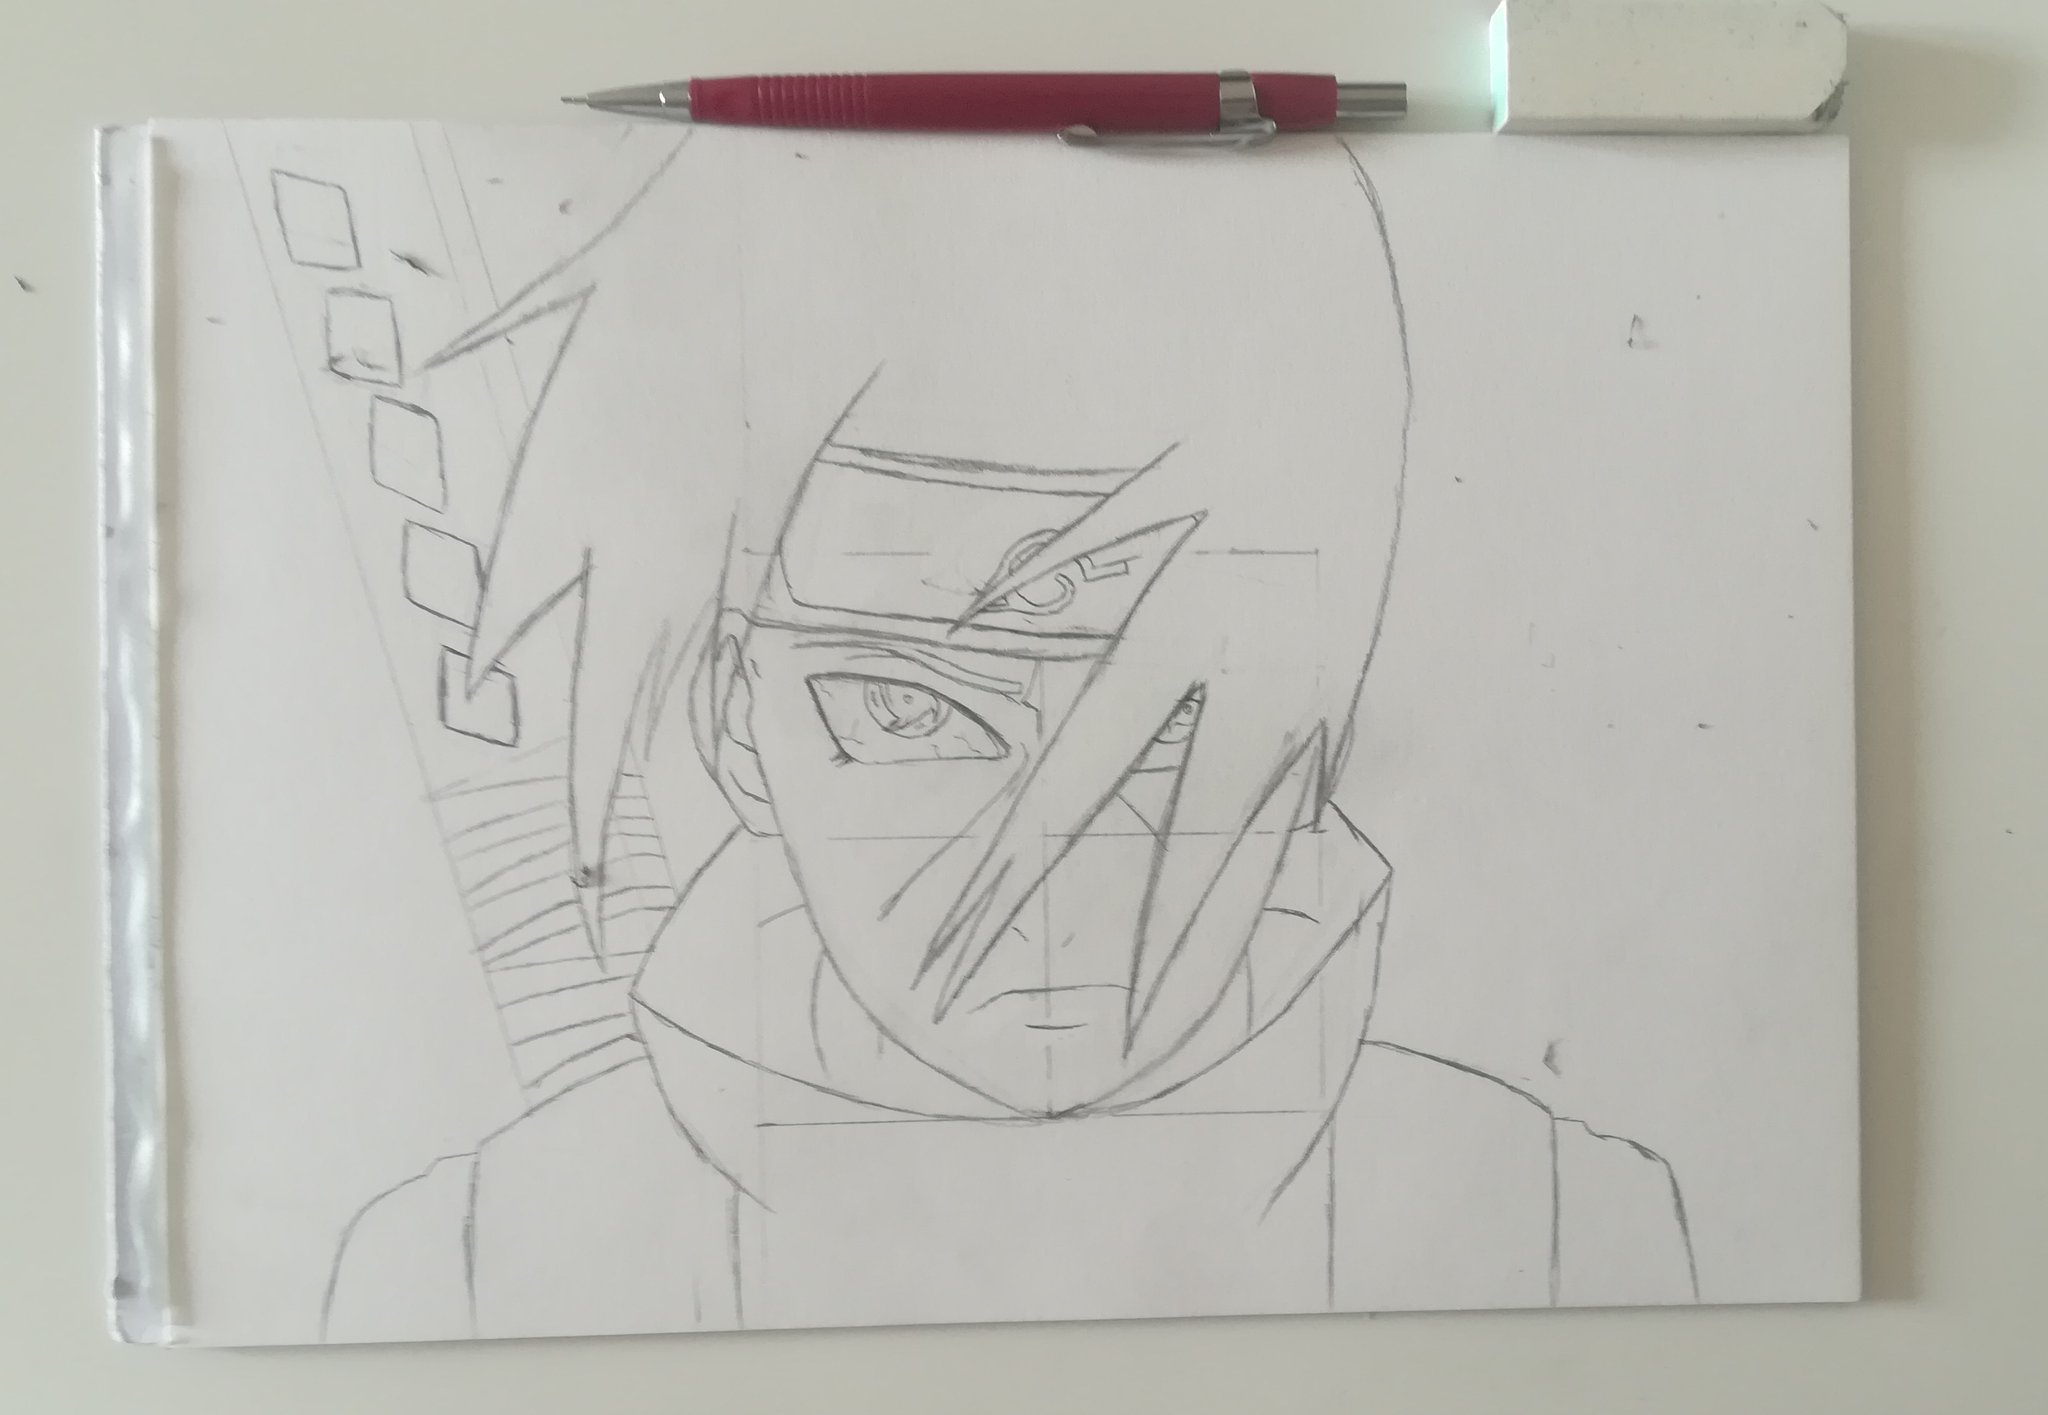 How to Draw Itachi Uchiha - Naruto, How to draw anime